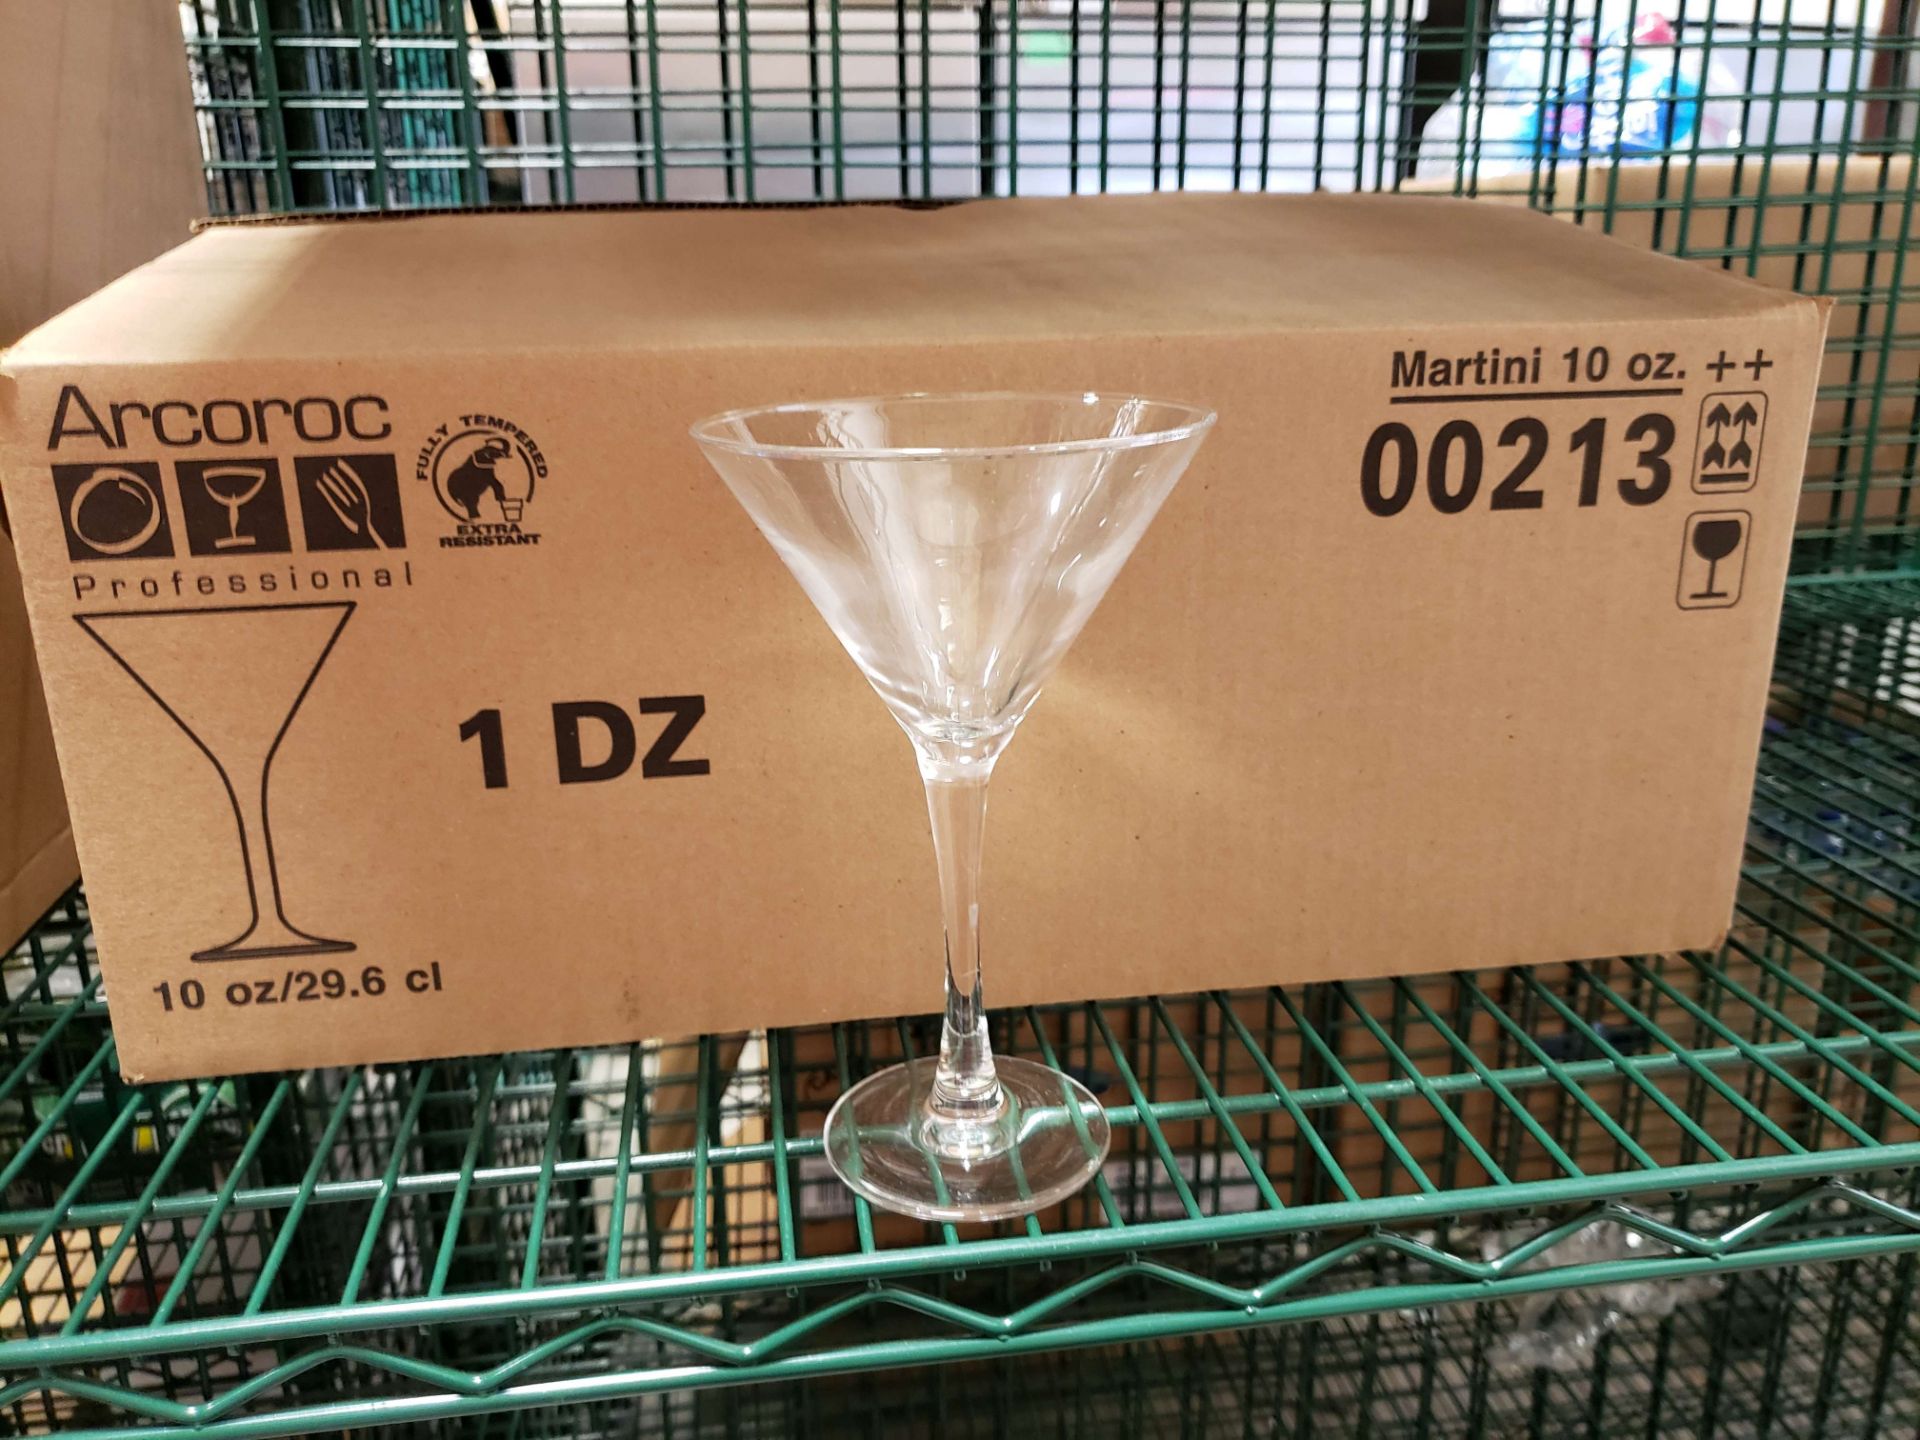 Arcoroc 10 oz Martini Glasses - Lot of 11